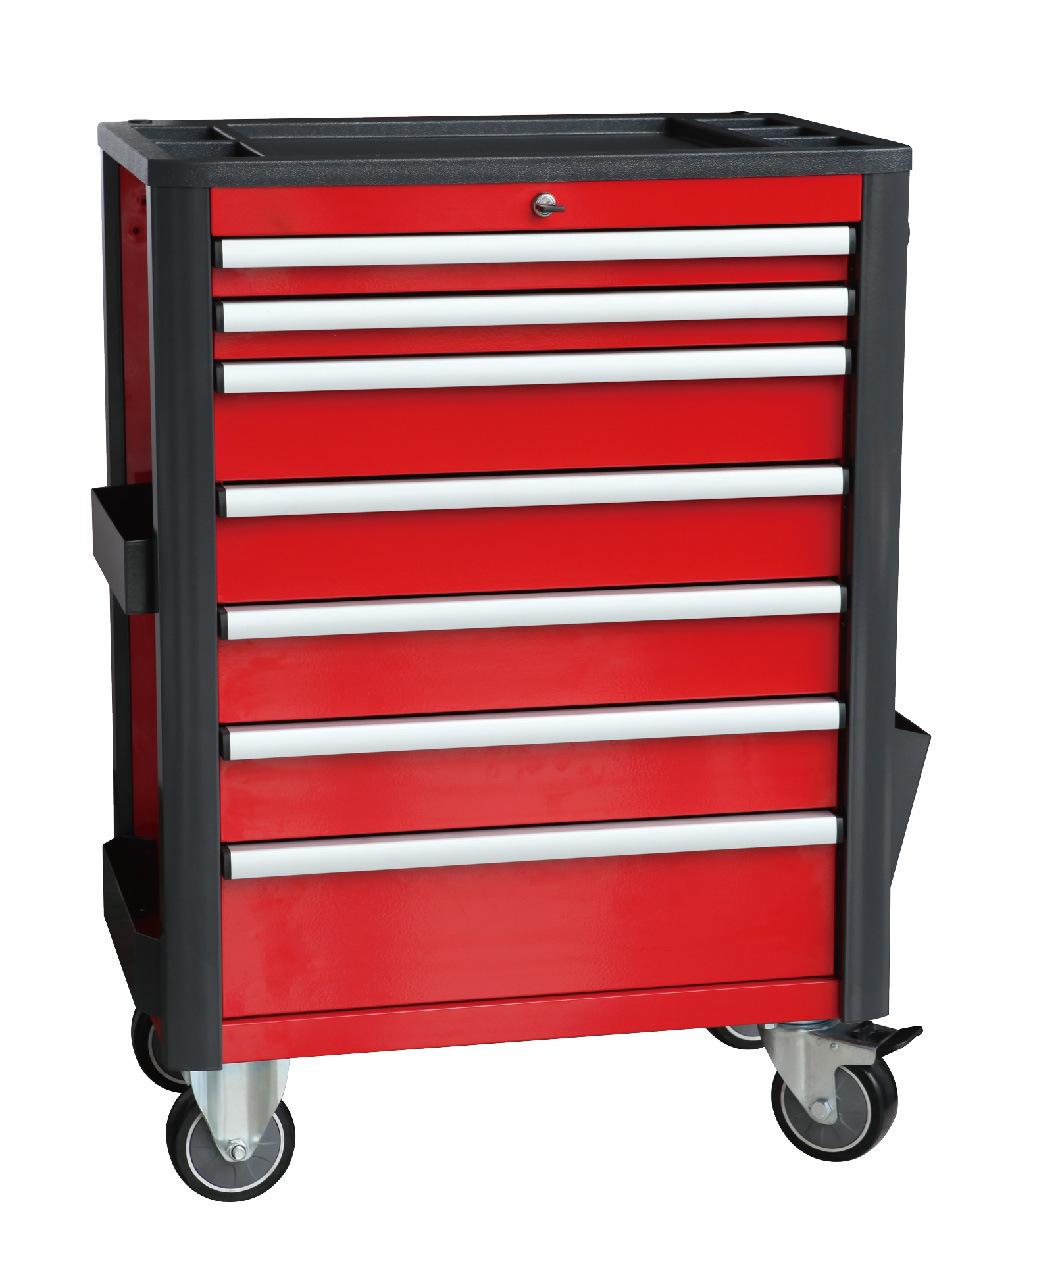 Workshop Rolling Garage Storage Cabinet and Cart